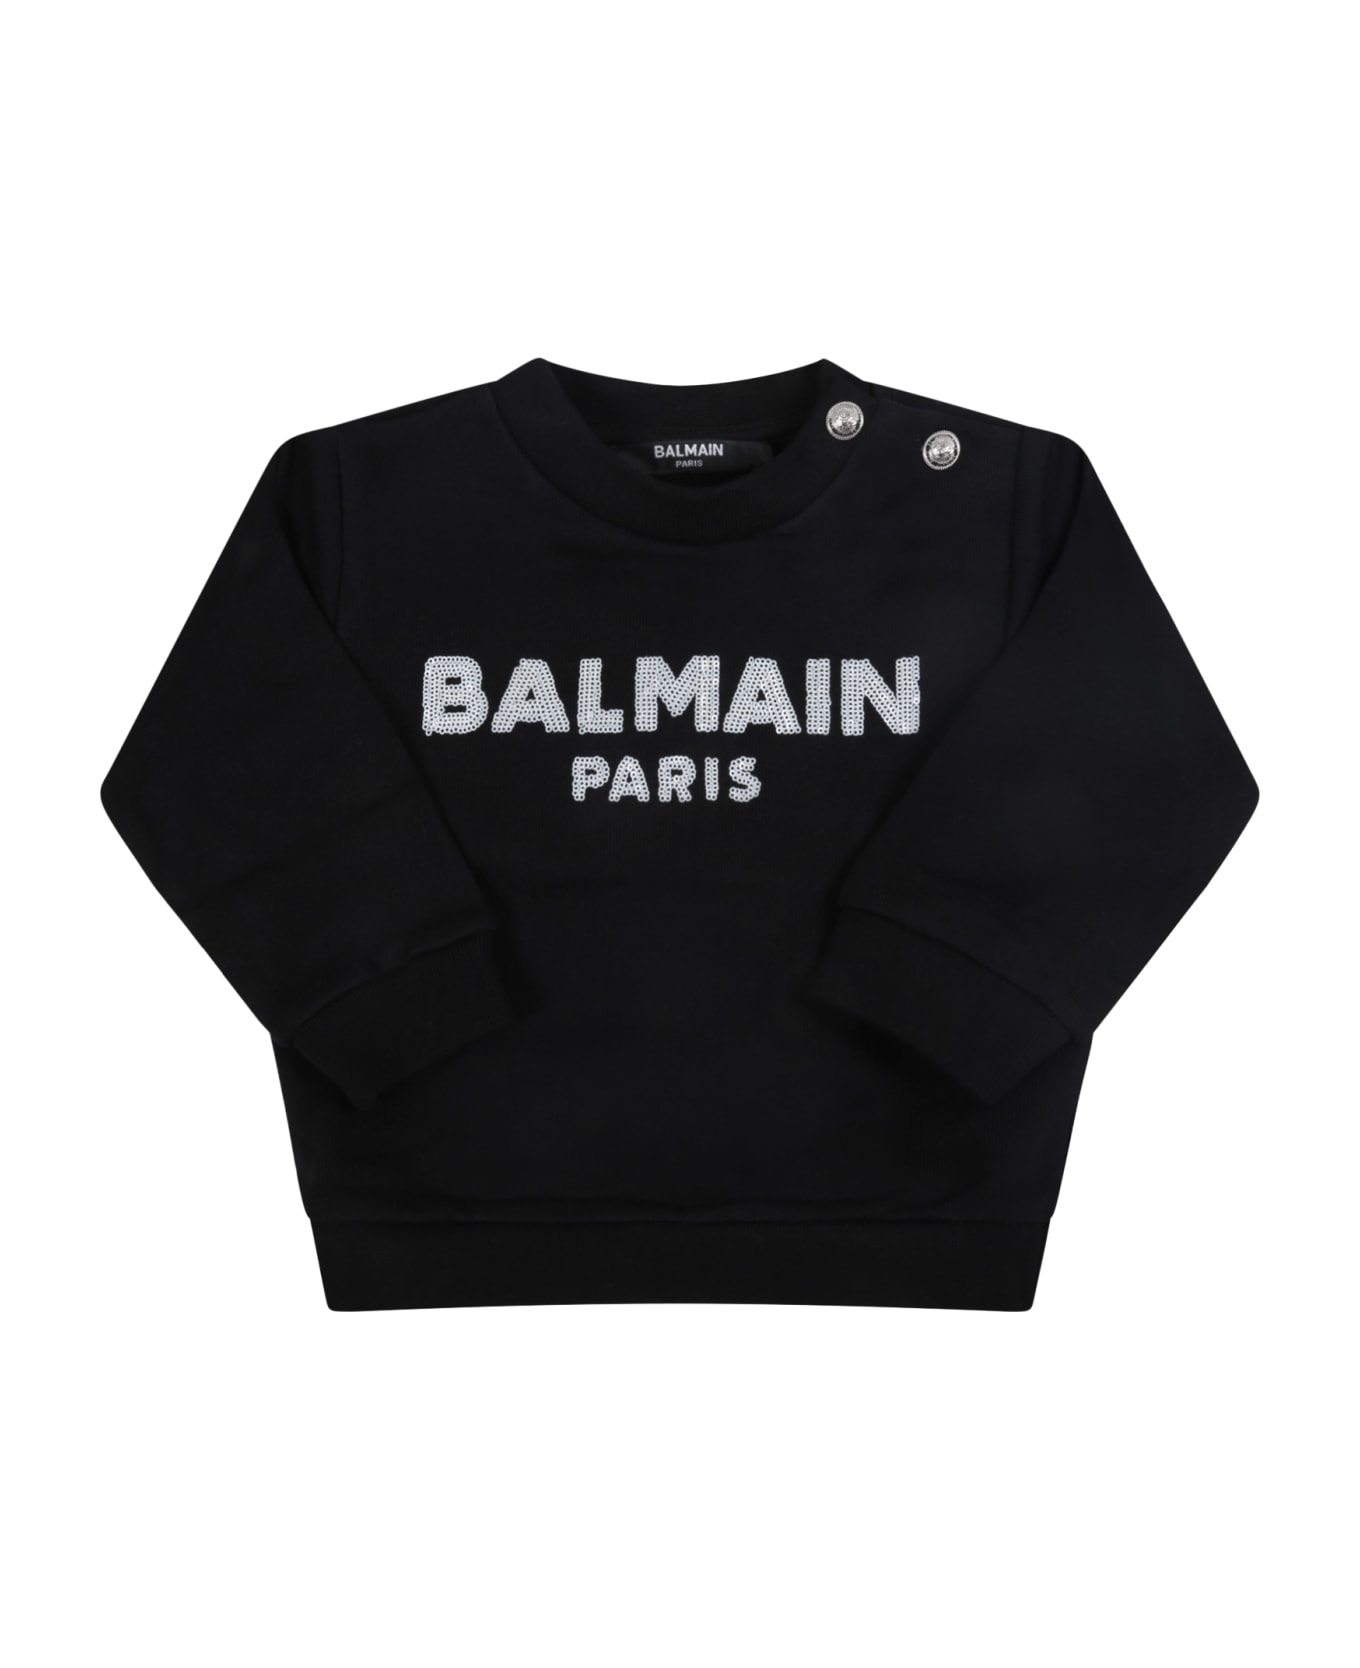 Balmain Black Sweatshirt For Baby Girl With Logo - Black